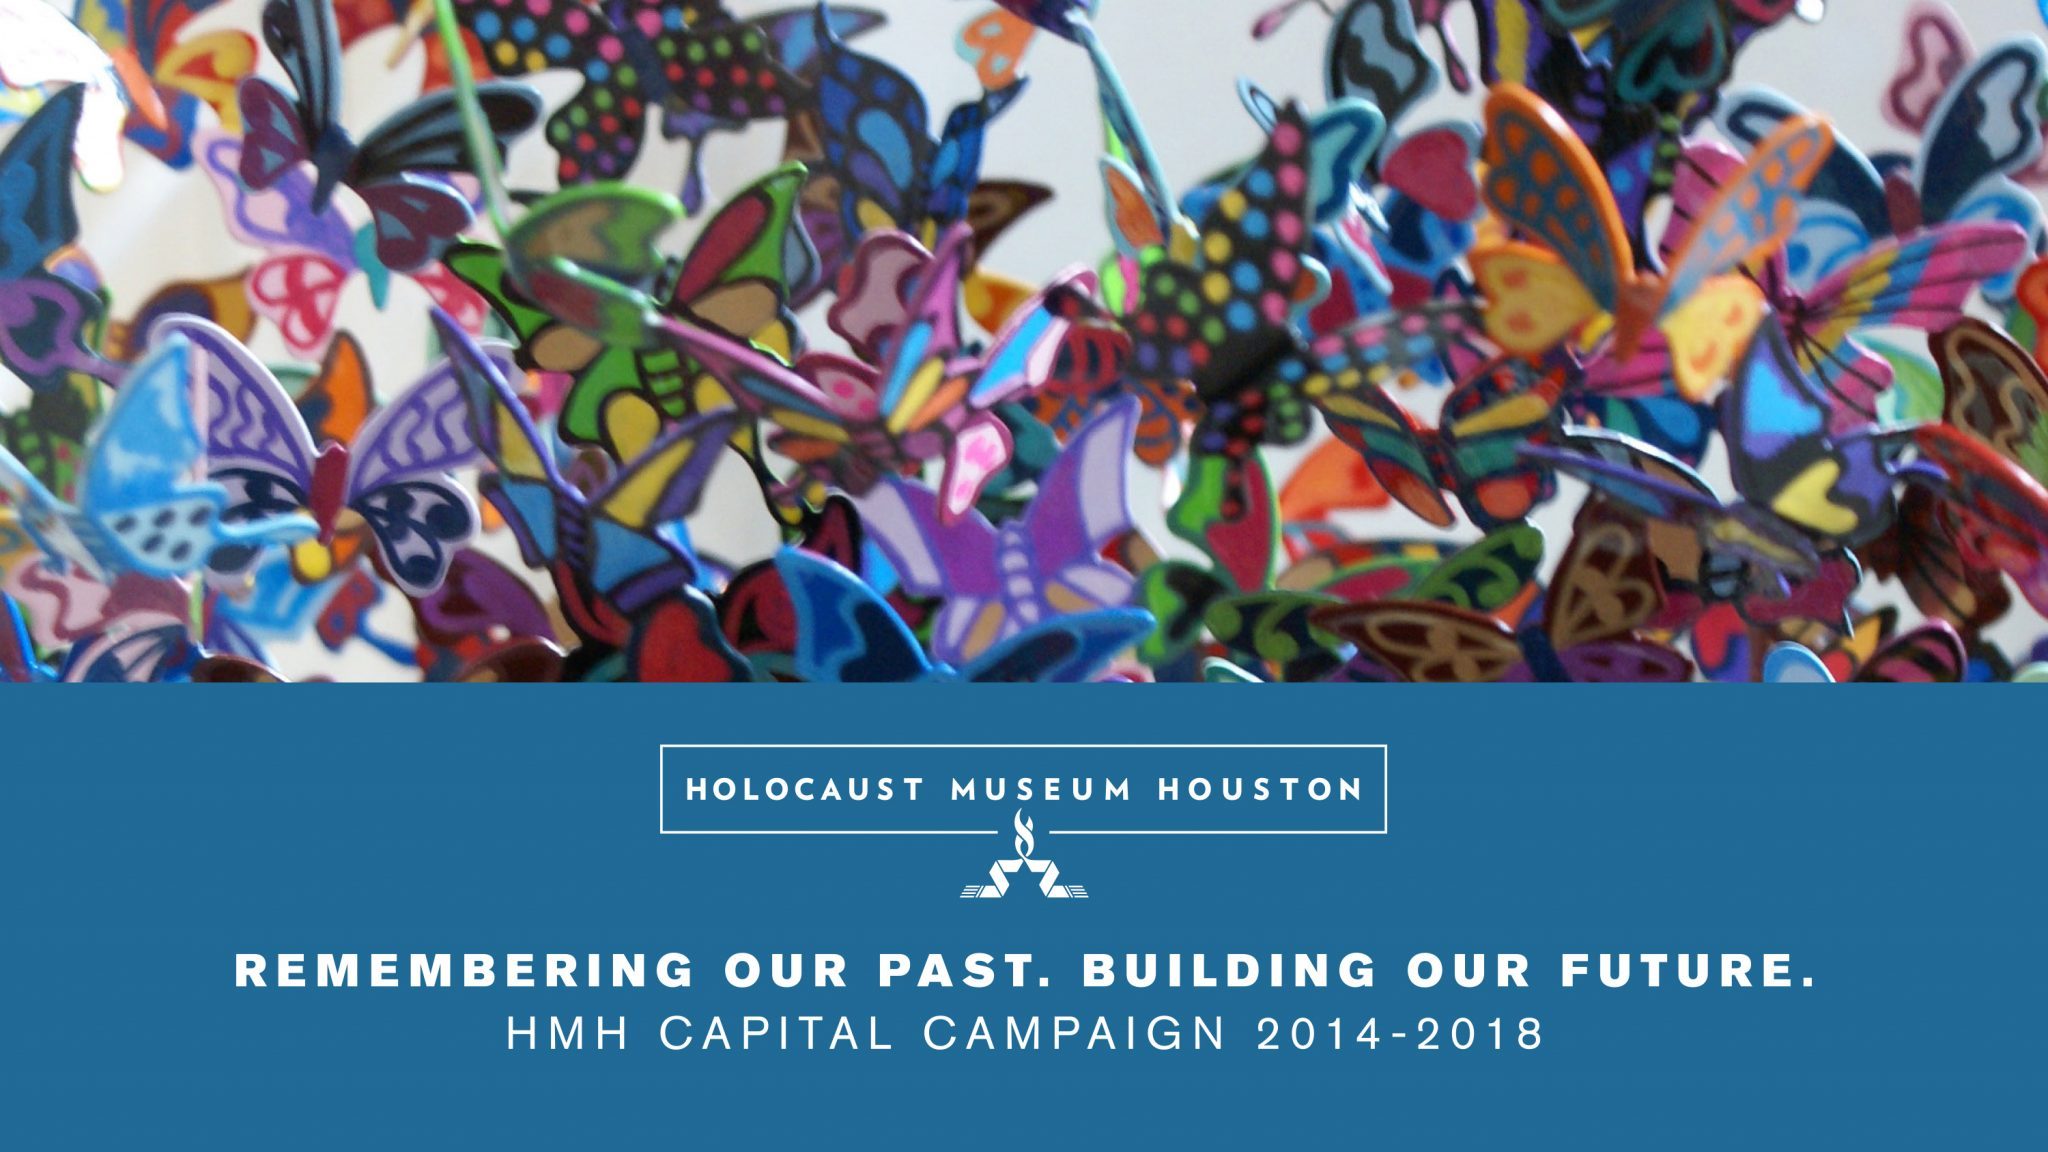 HMH Capital Campaign Video